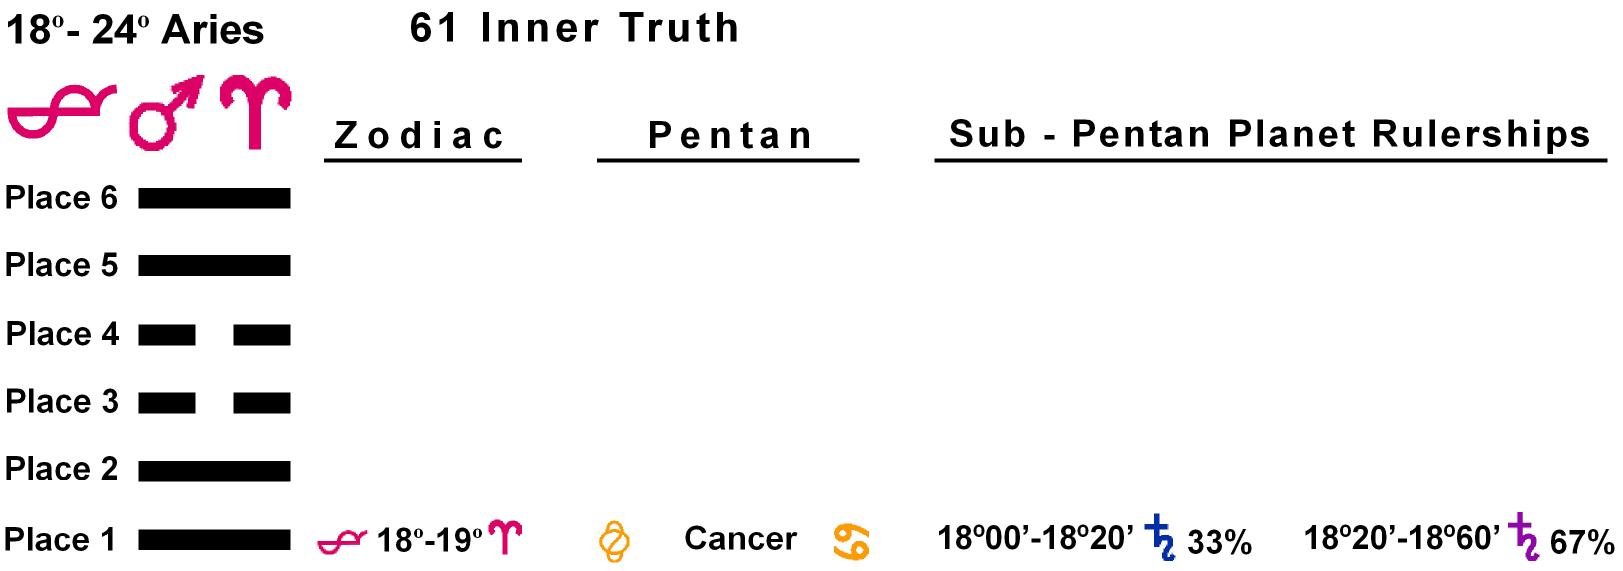 Pent-lines-01AR 18-19 Hx-61 Inner Truth